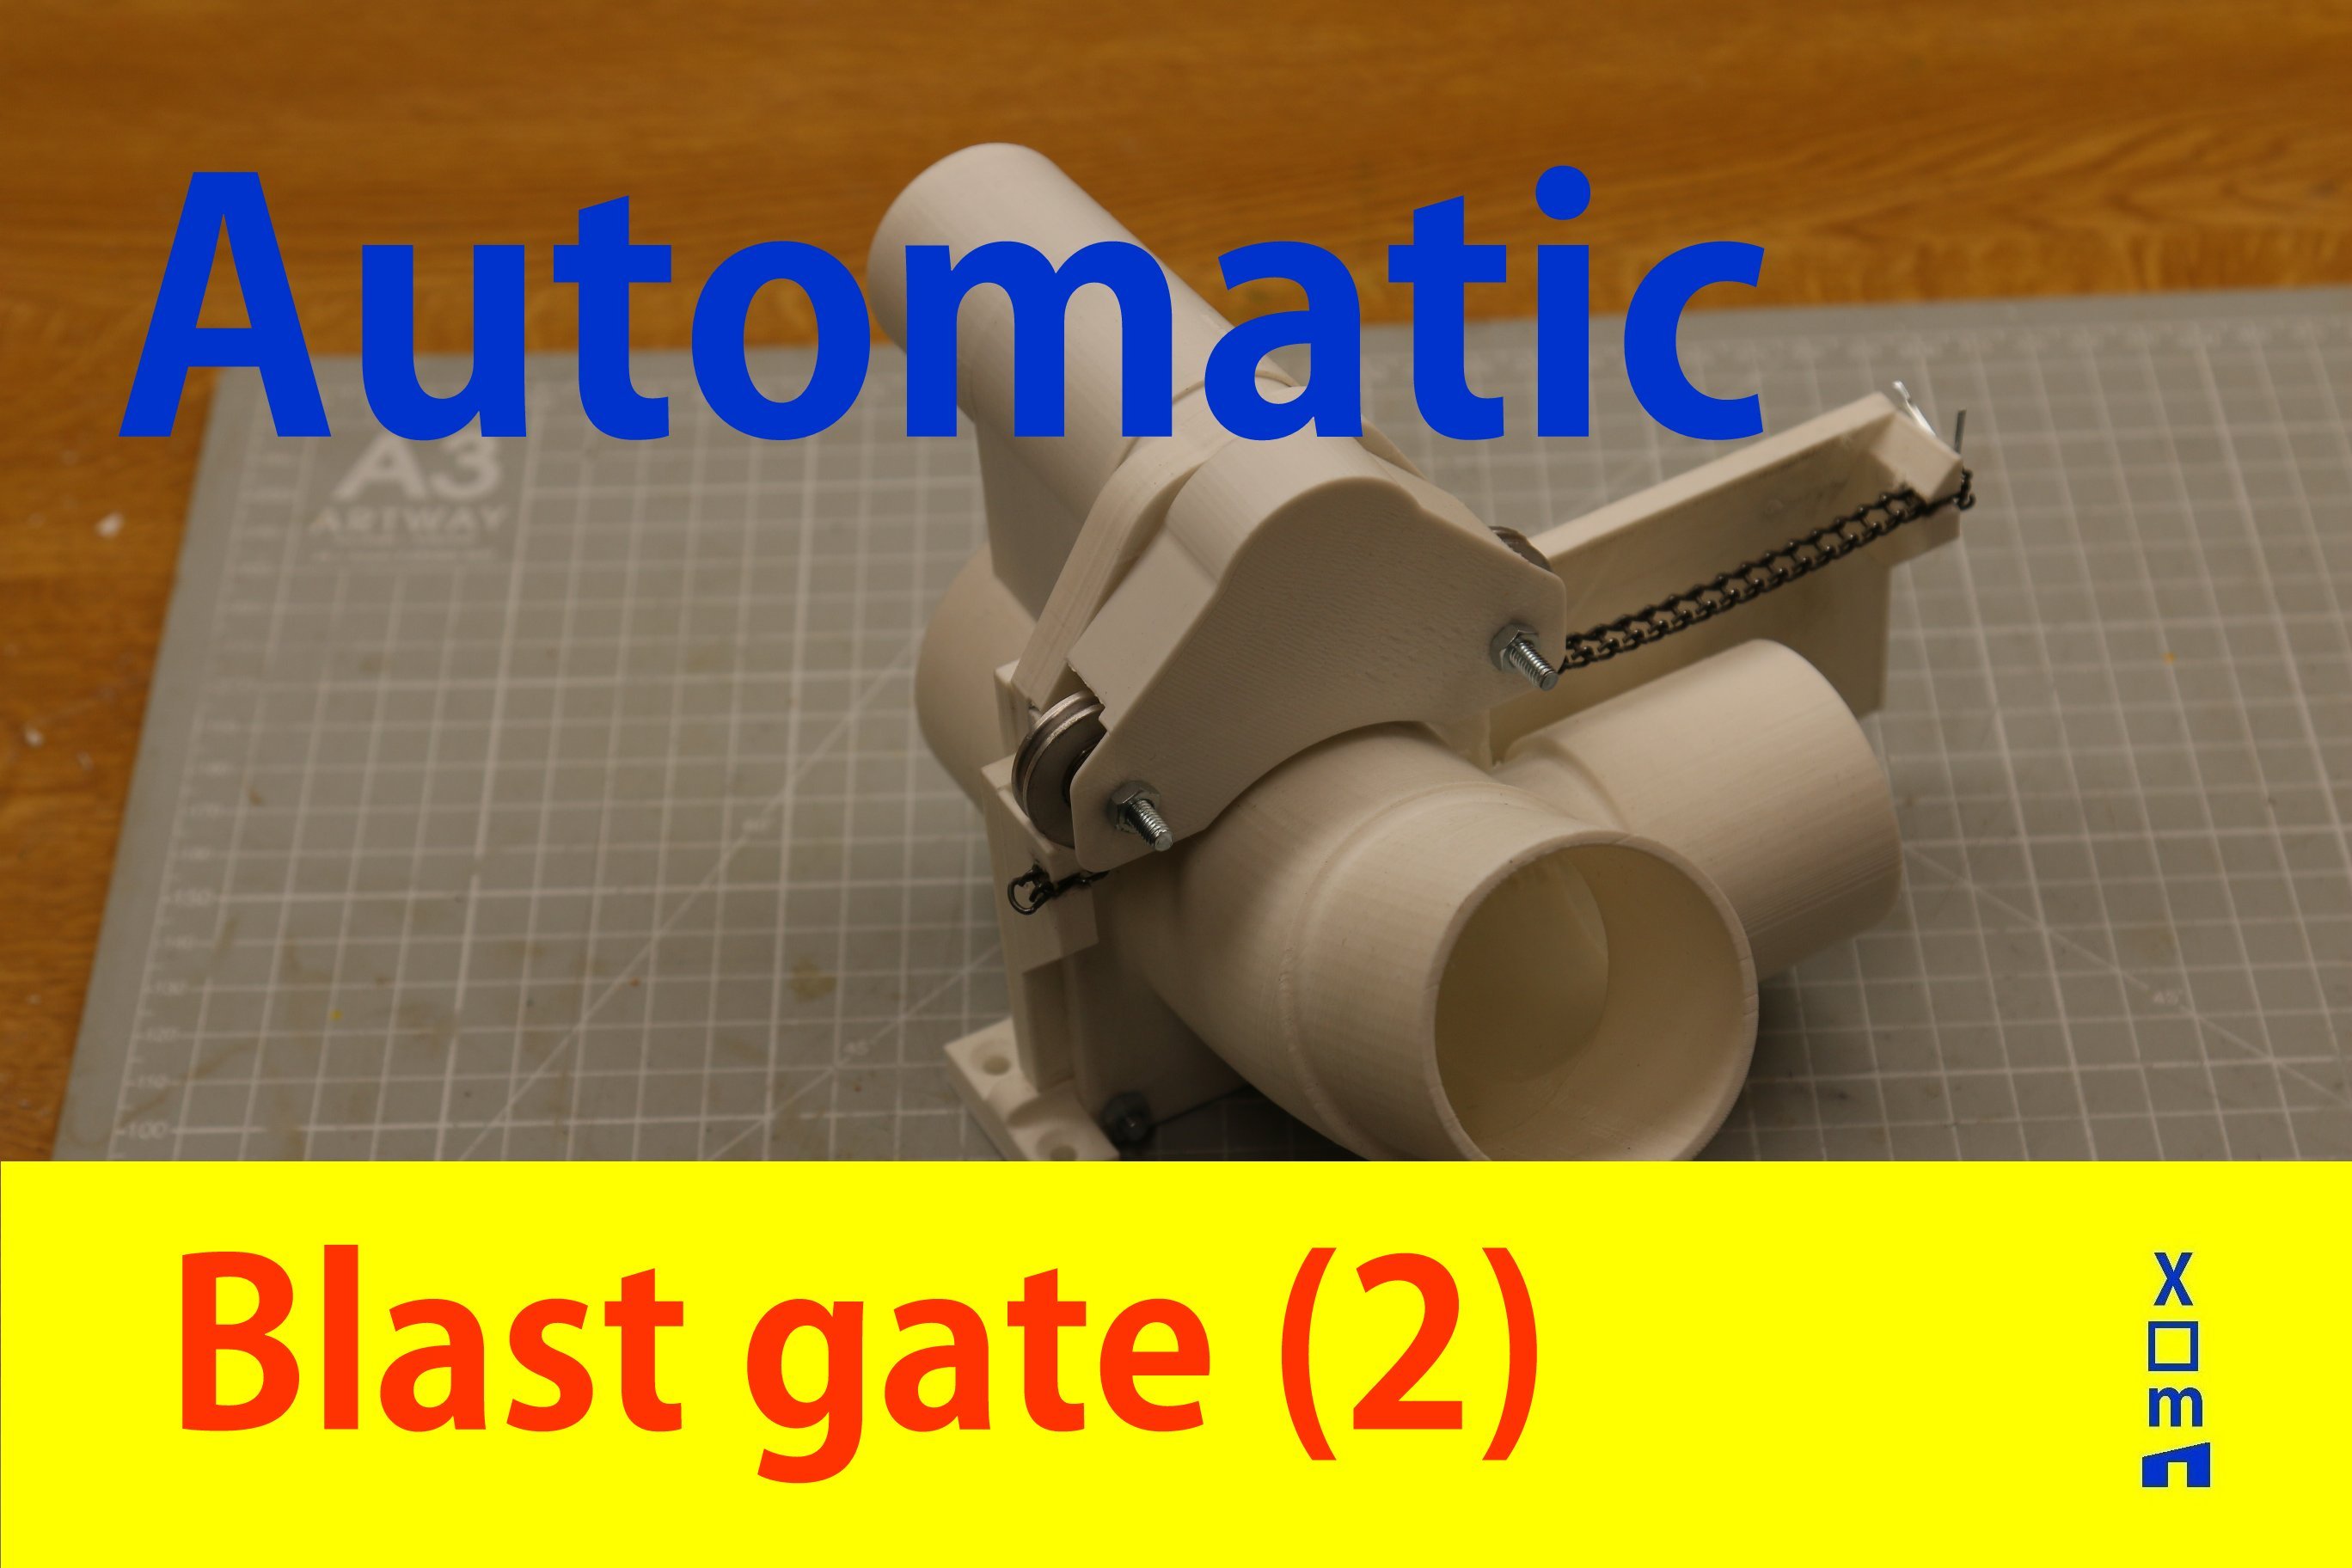 Automatic blast gate